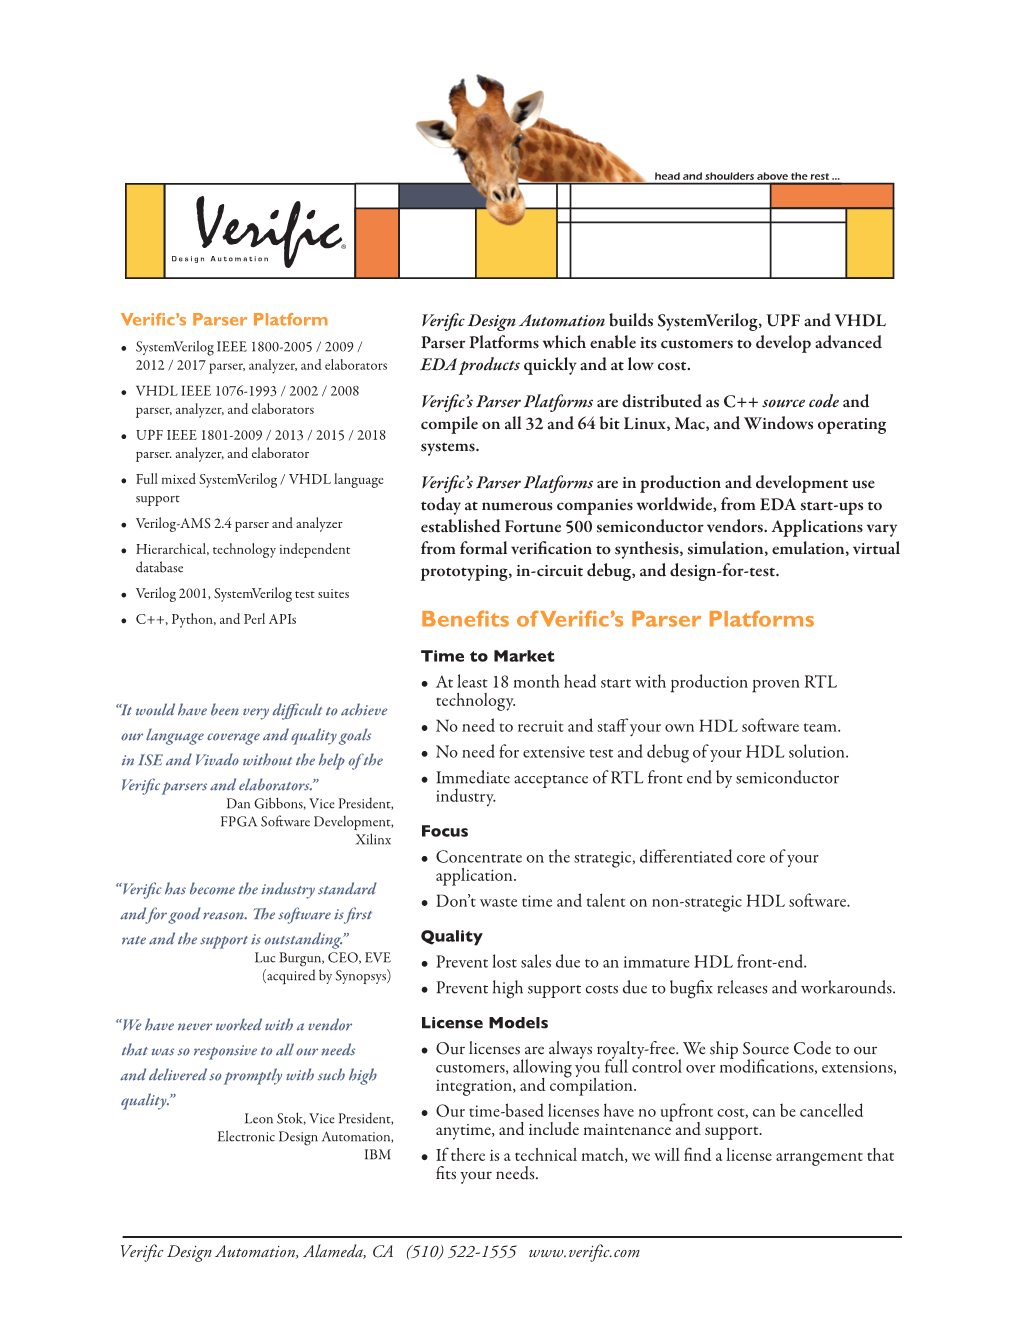 Benefits of Verific's Parser Platforms